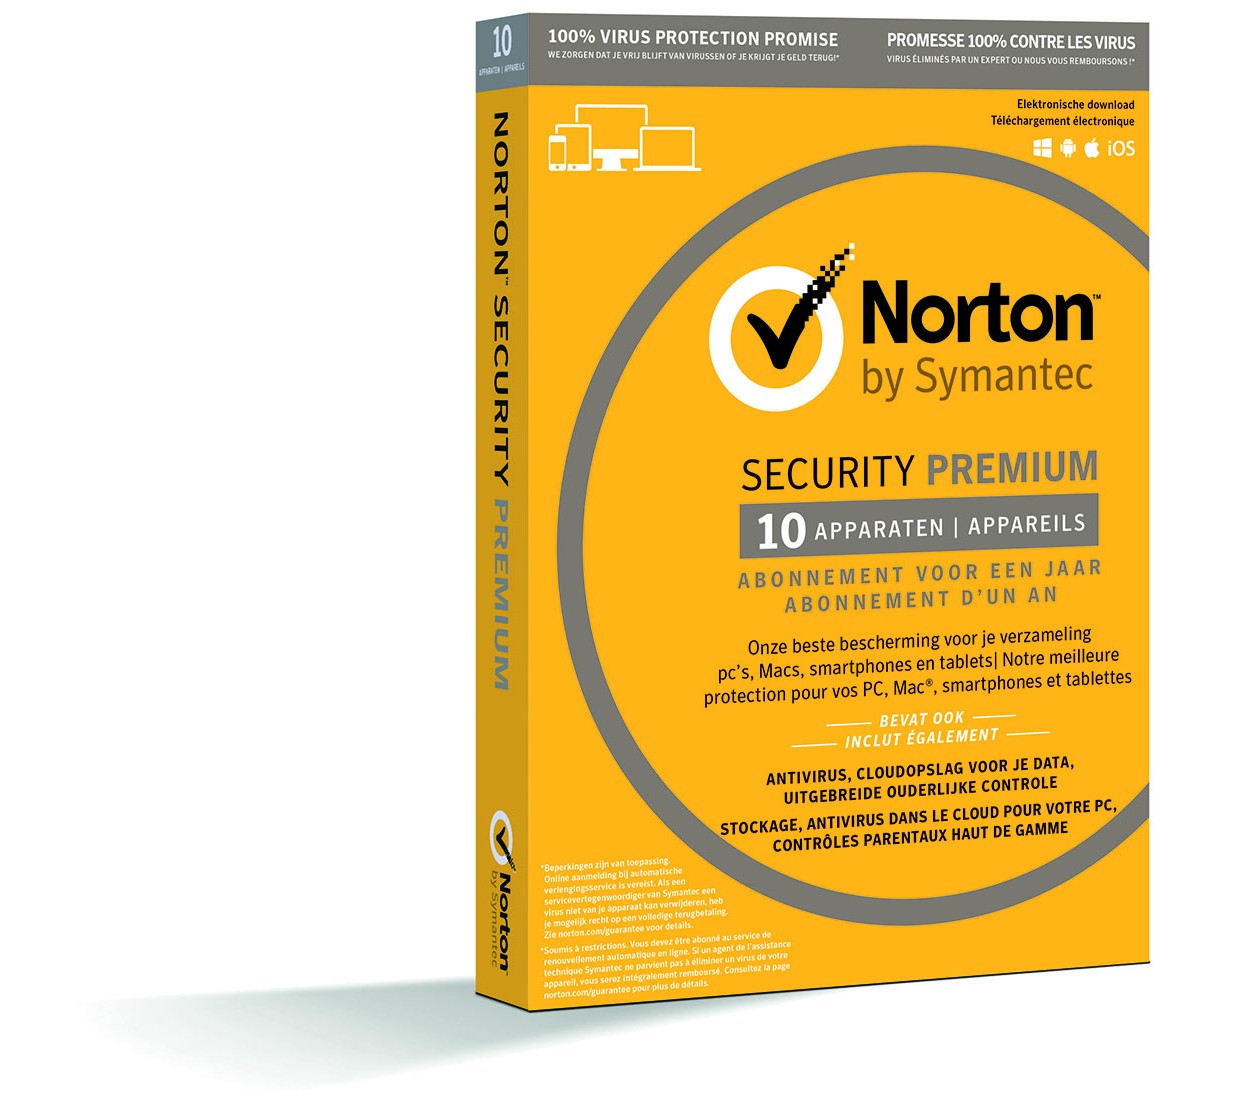 Norton security for windows 10